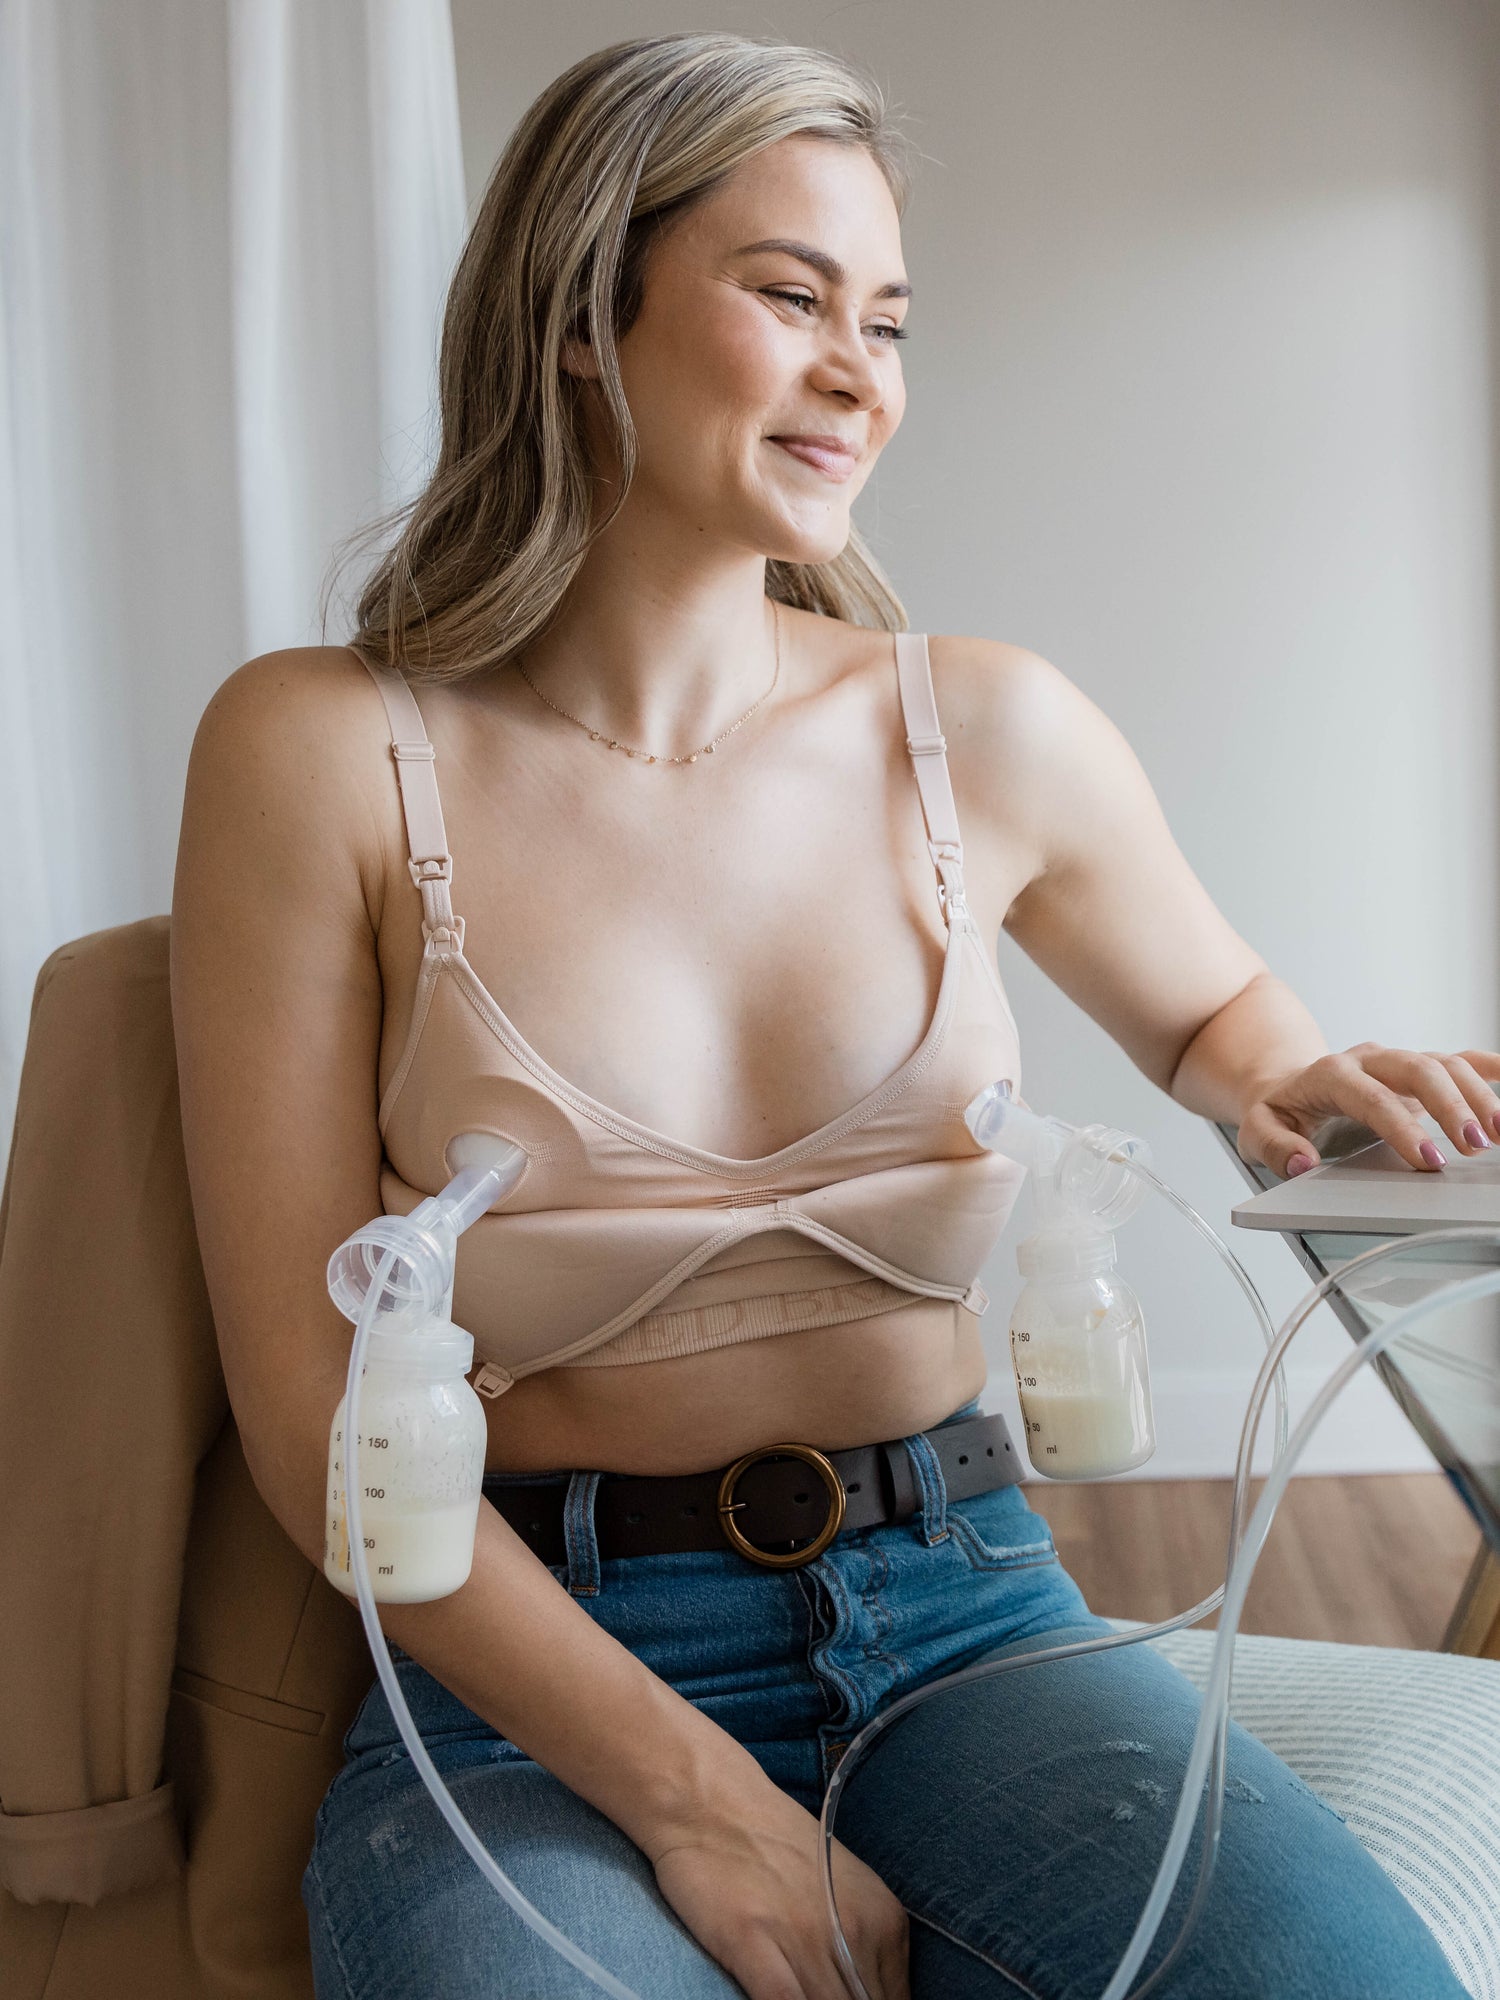 nursing bra – the stylish bump